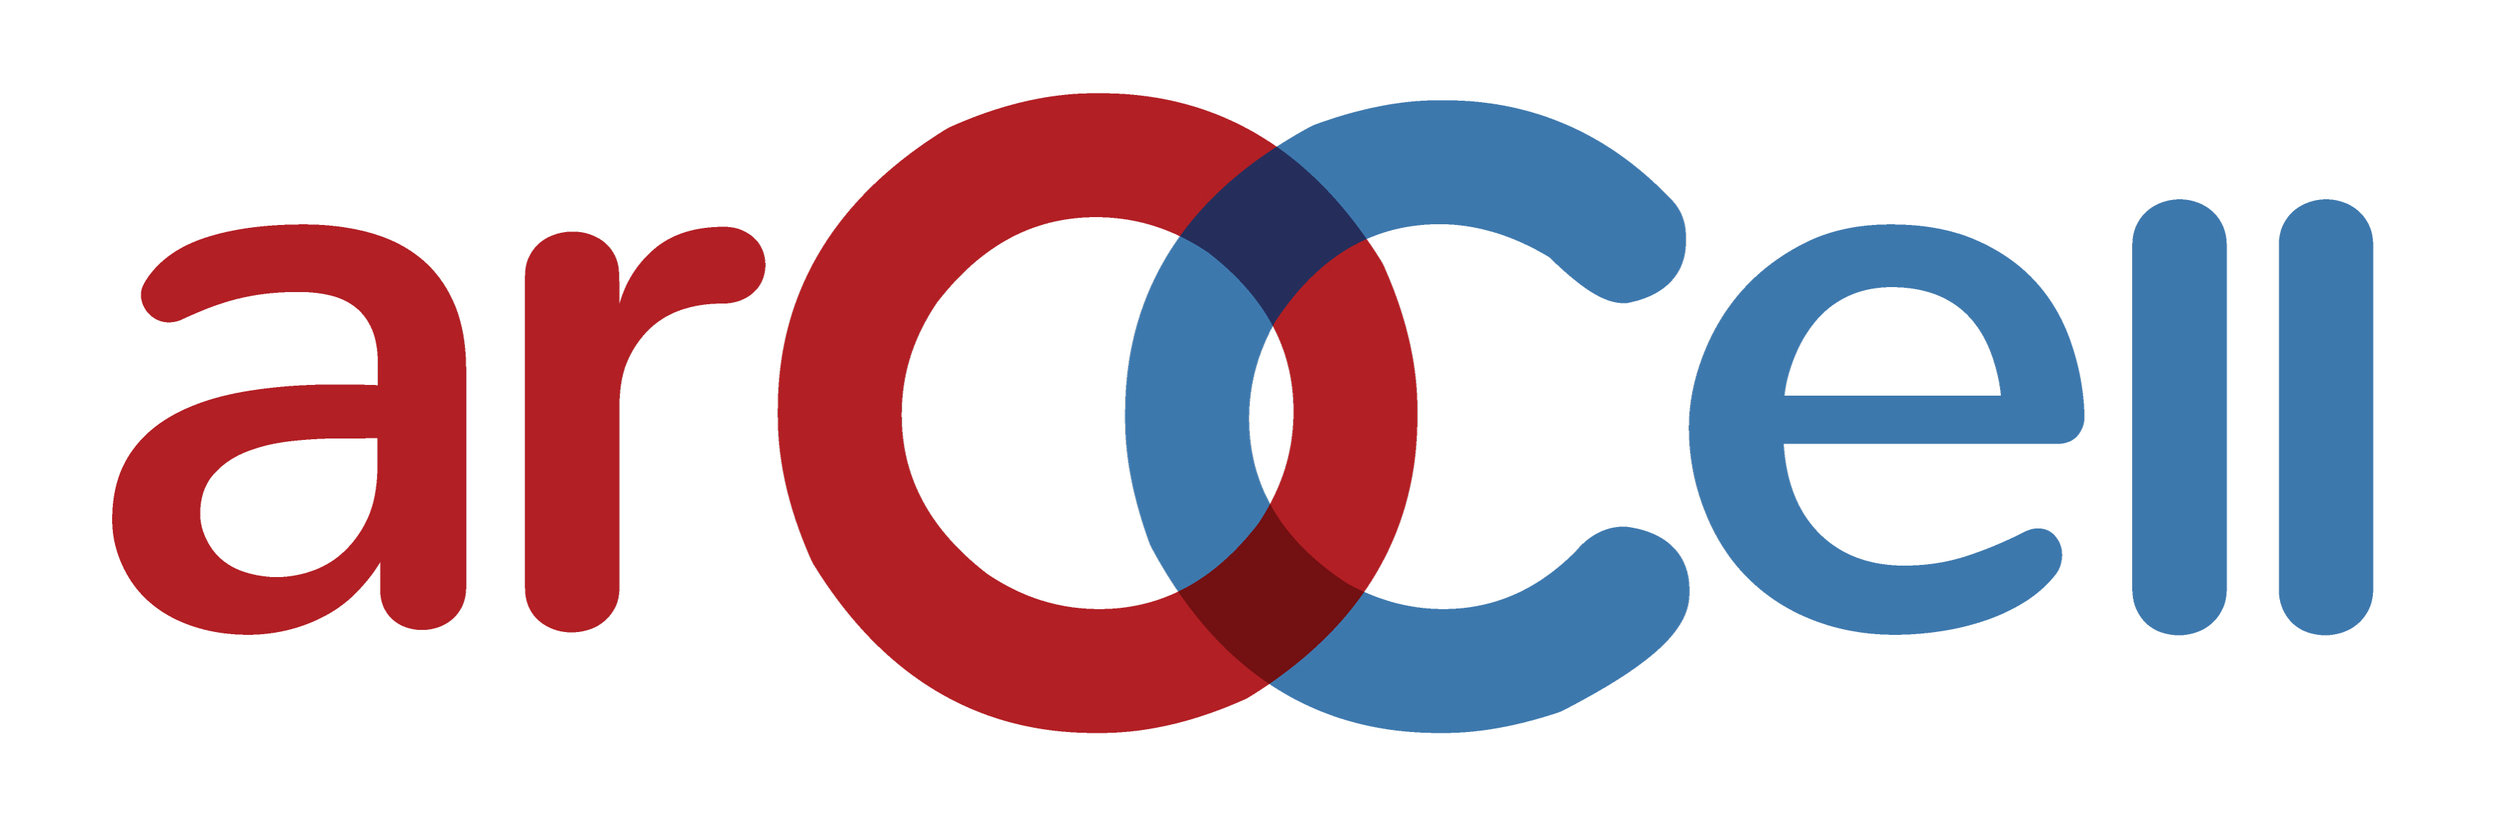 AroCell_logo-2.jpg